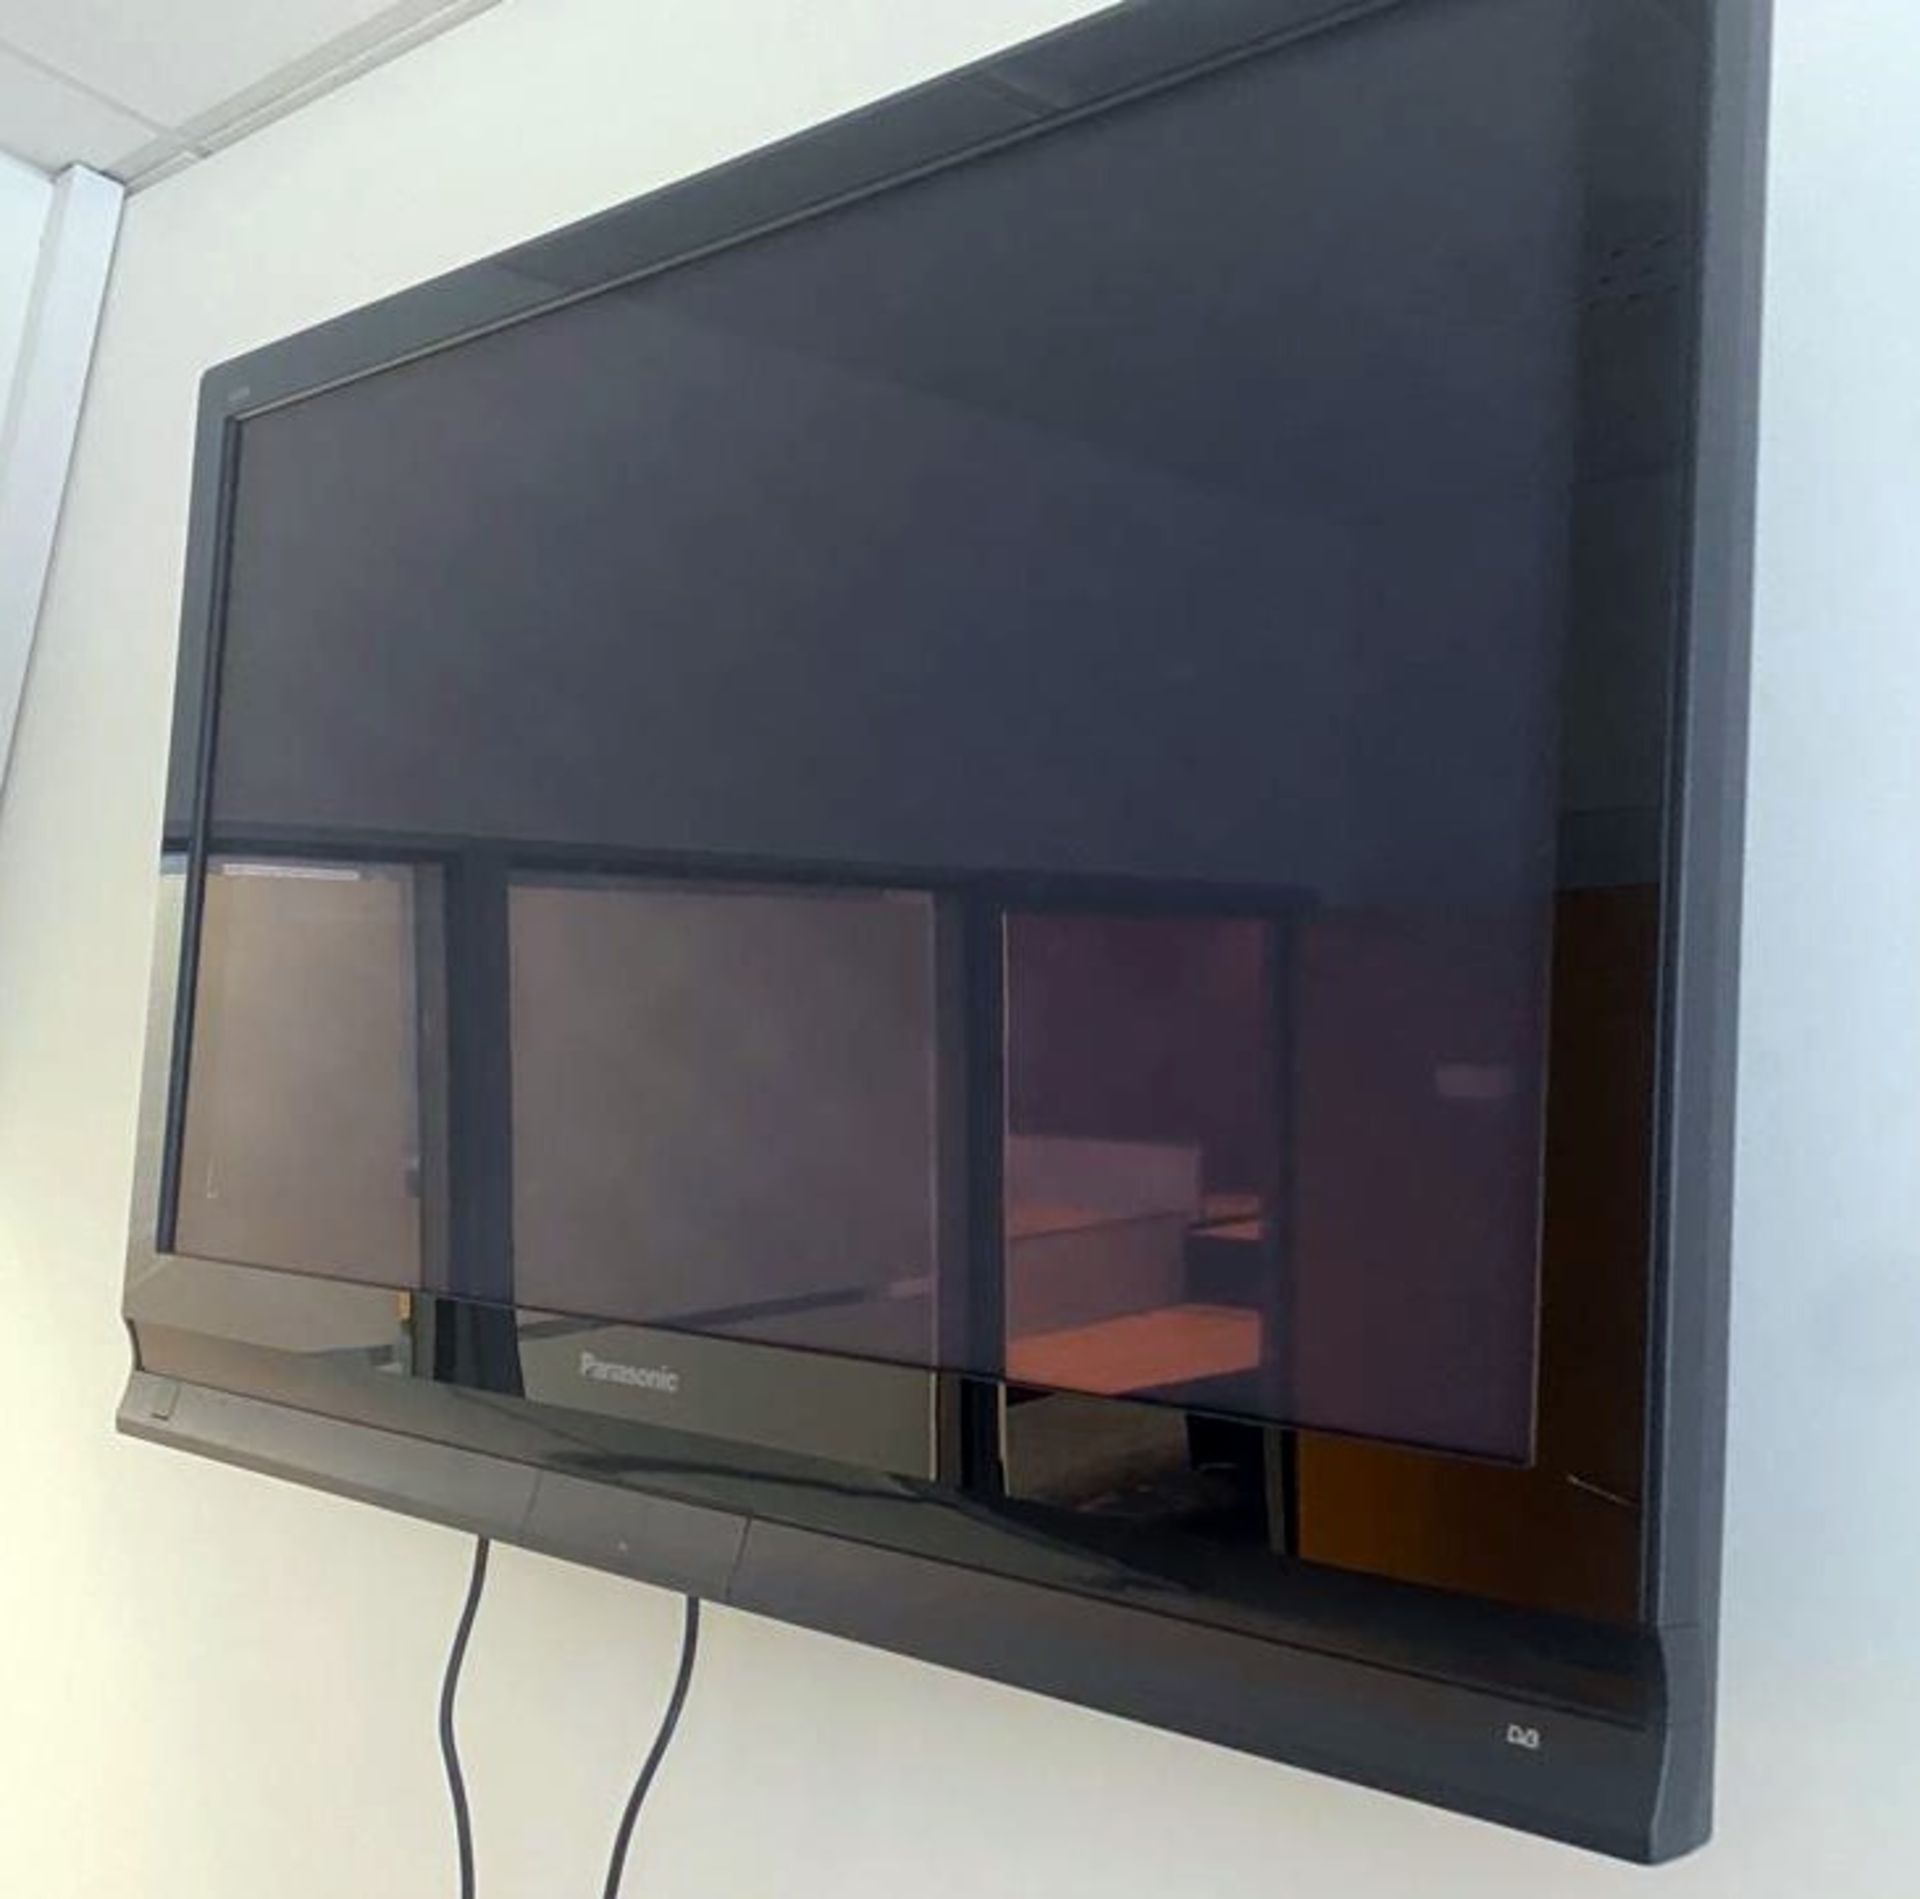 1 x Panasonic 42 Inch Flat Screen TV With Wall Mount - Image 2 of 3